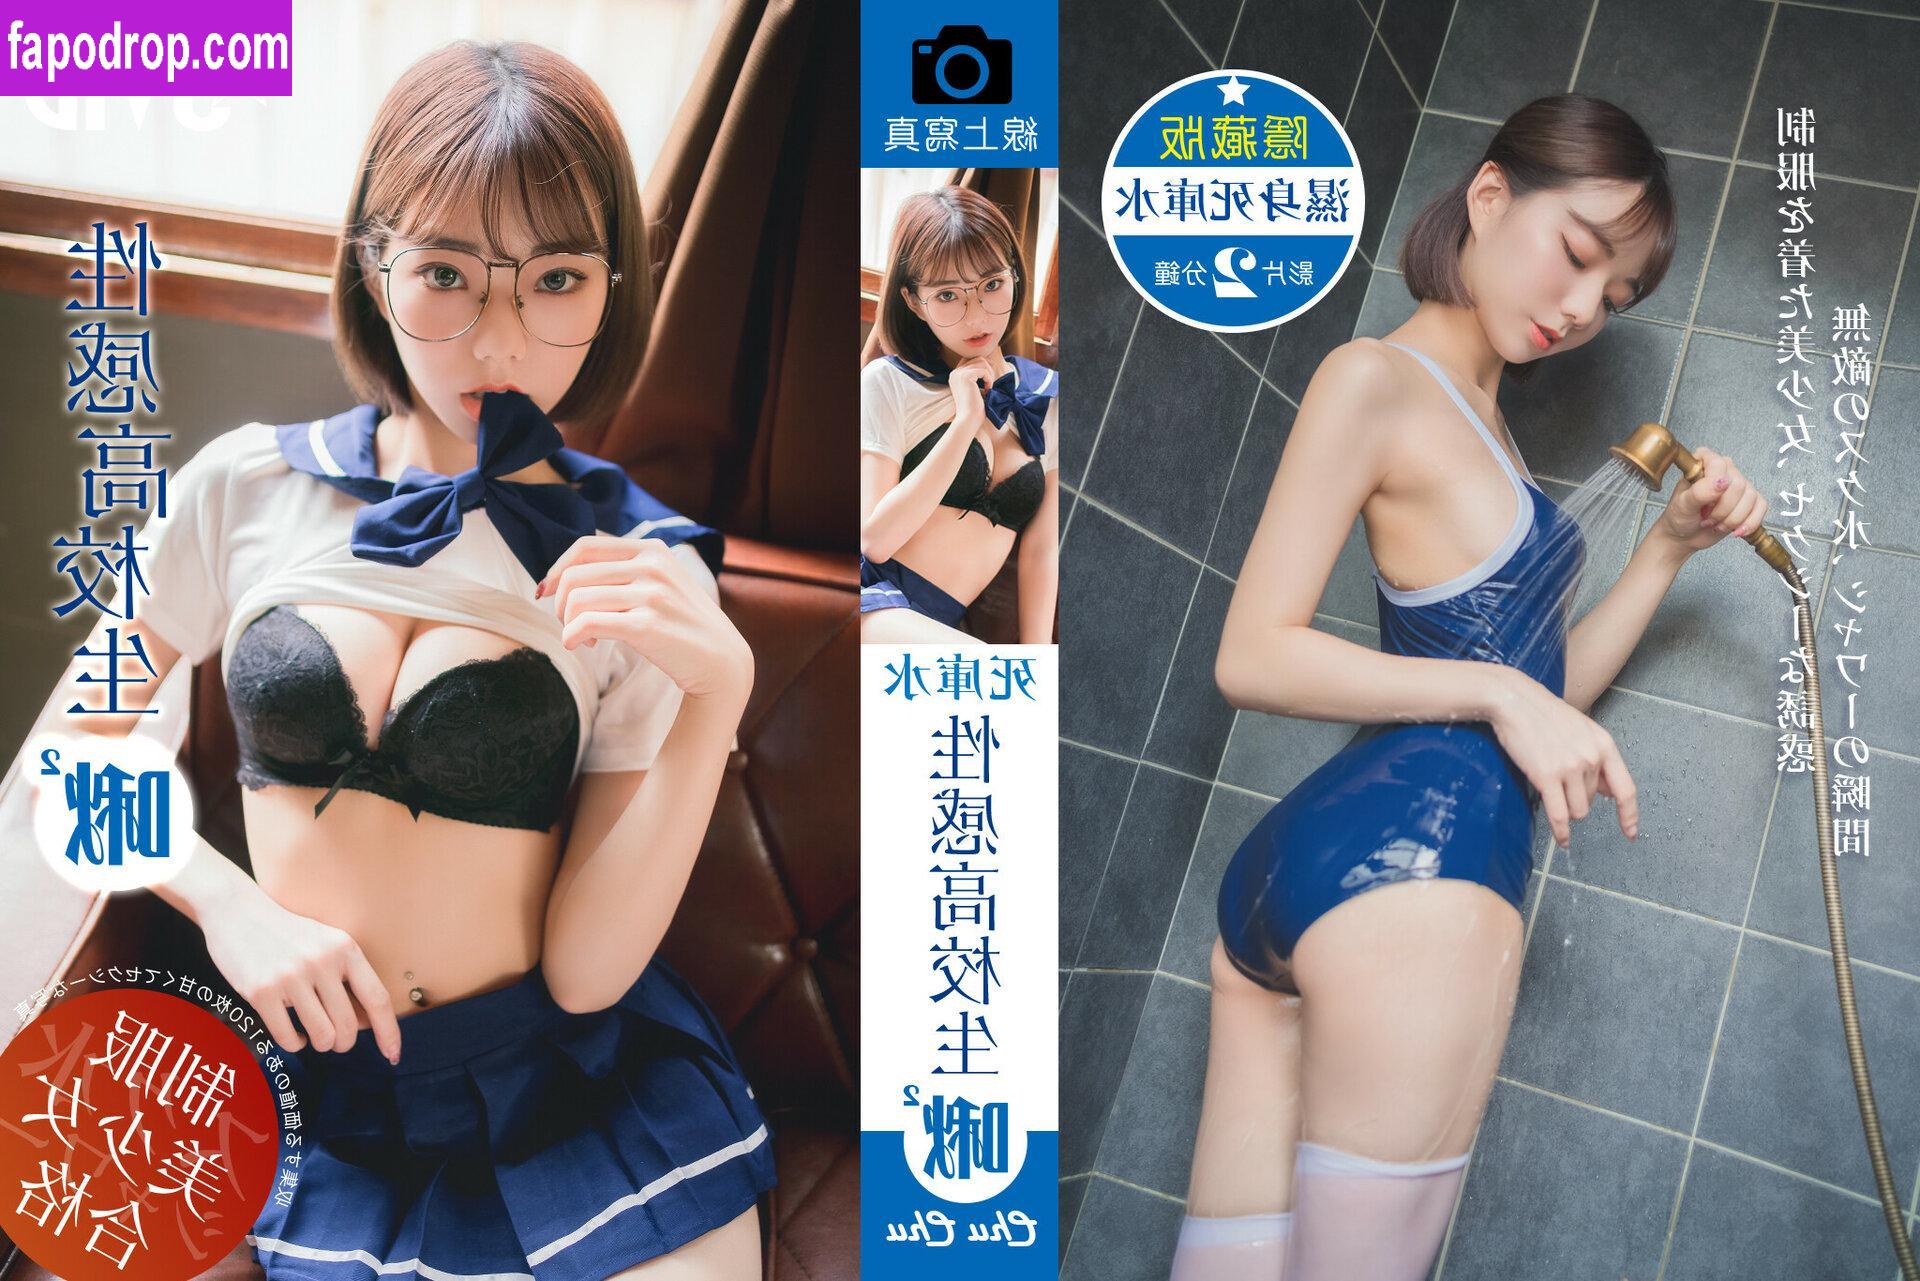 Chuchu0526 / chuchu05261314 / 啾啾小公主 leak of nude photo #0026 from OnlyFans or Patreon